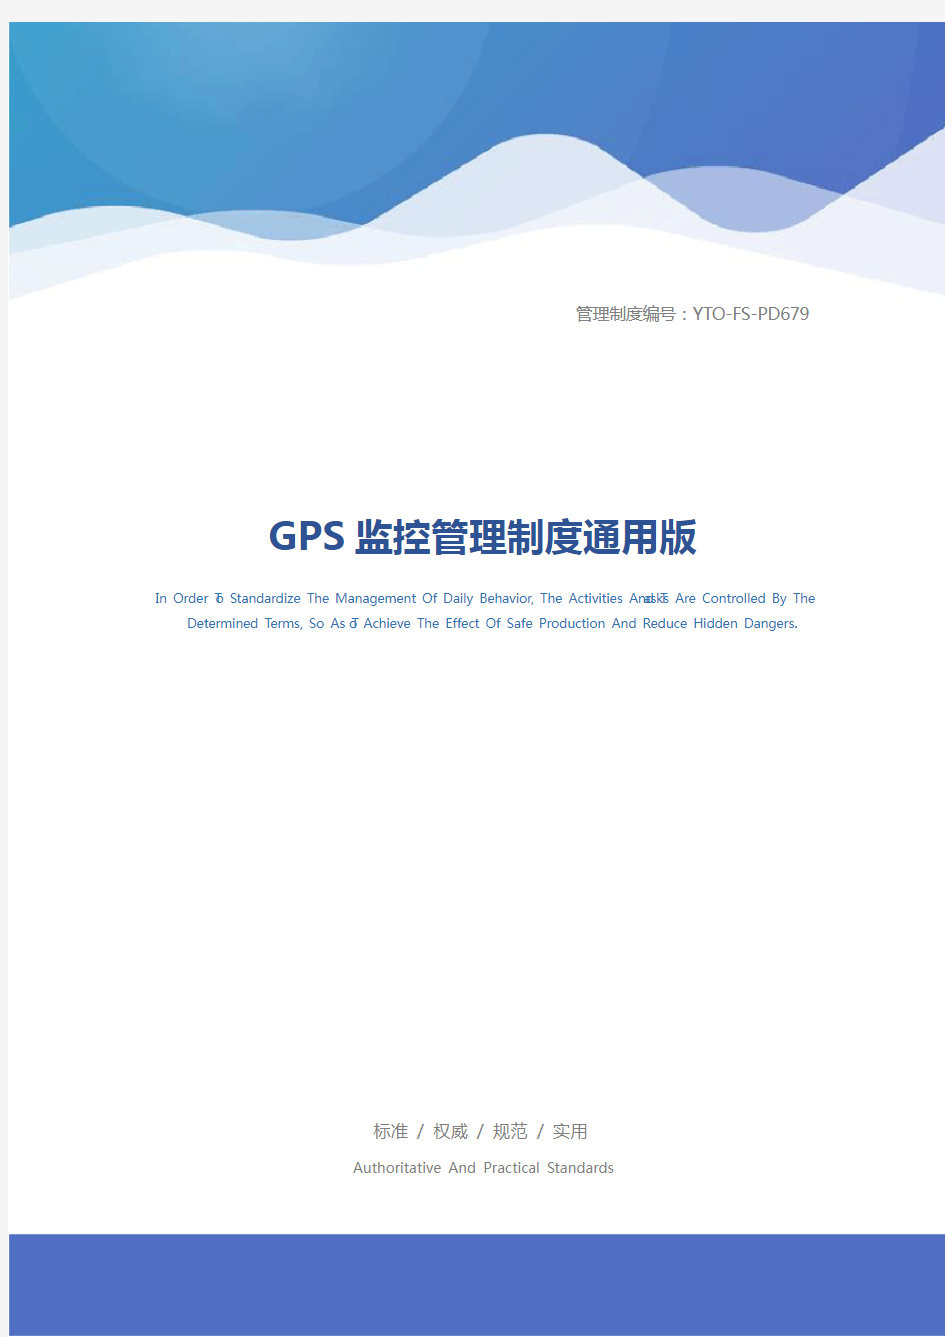 GPS监控管理制度通用版